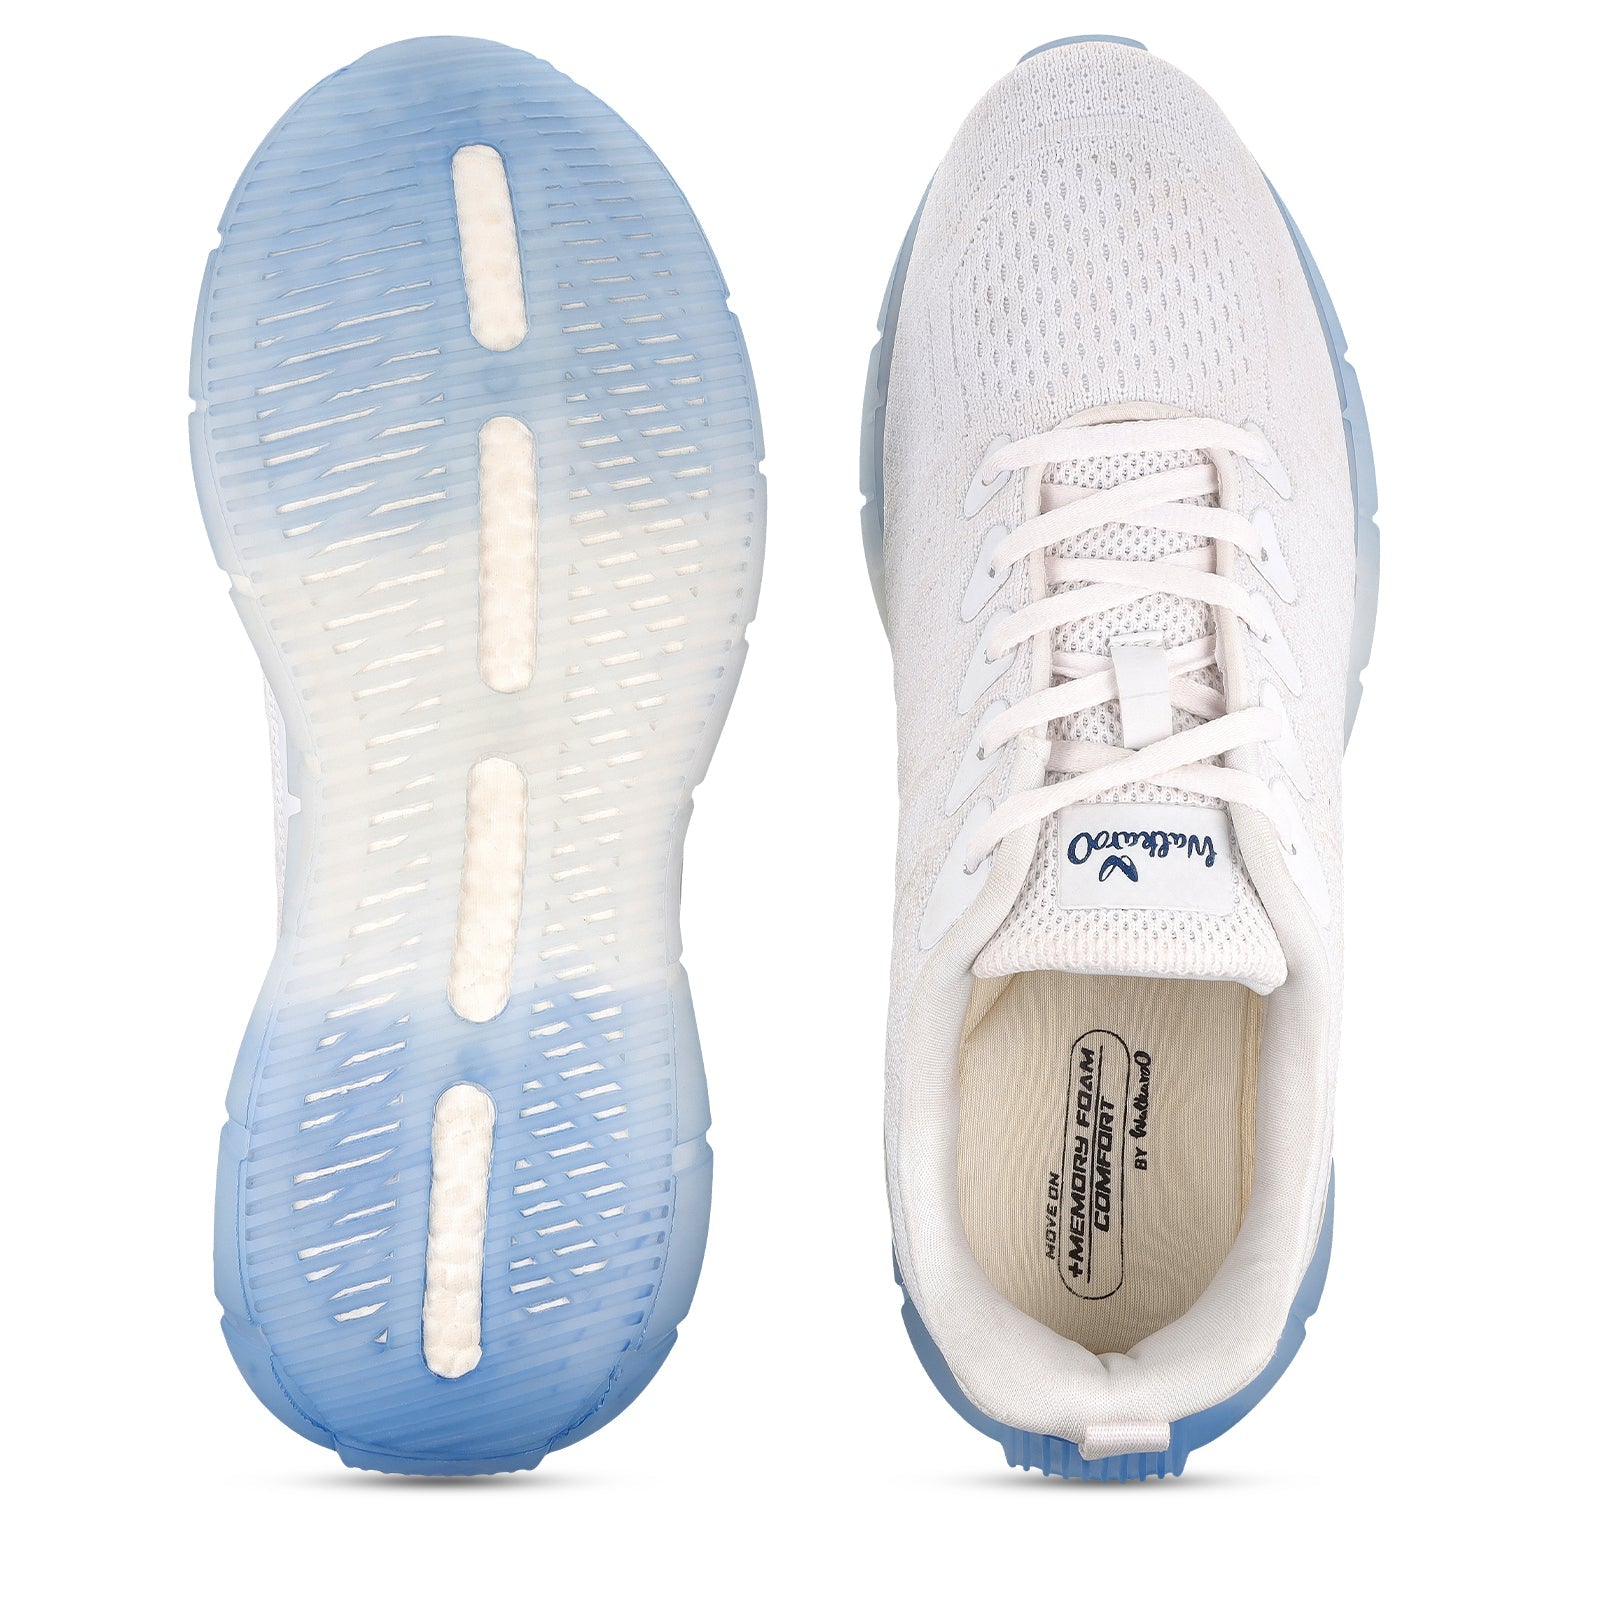 Buy Vkc Walkaroo 9039 Navy Blue Sport Shoe online from Veer Paint & Footwear